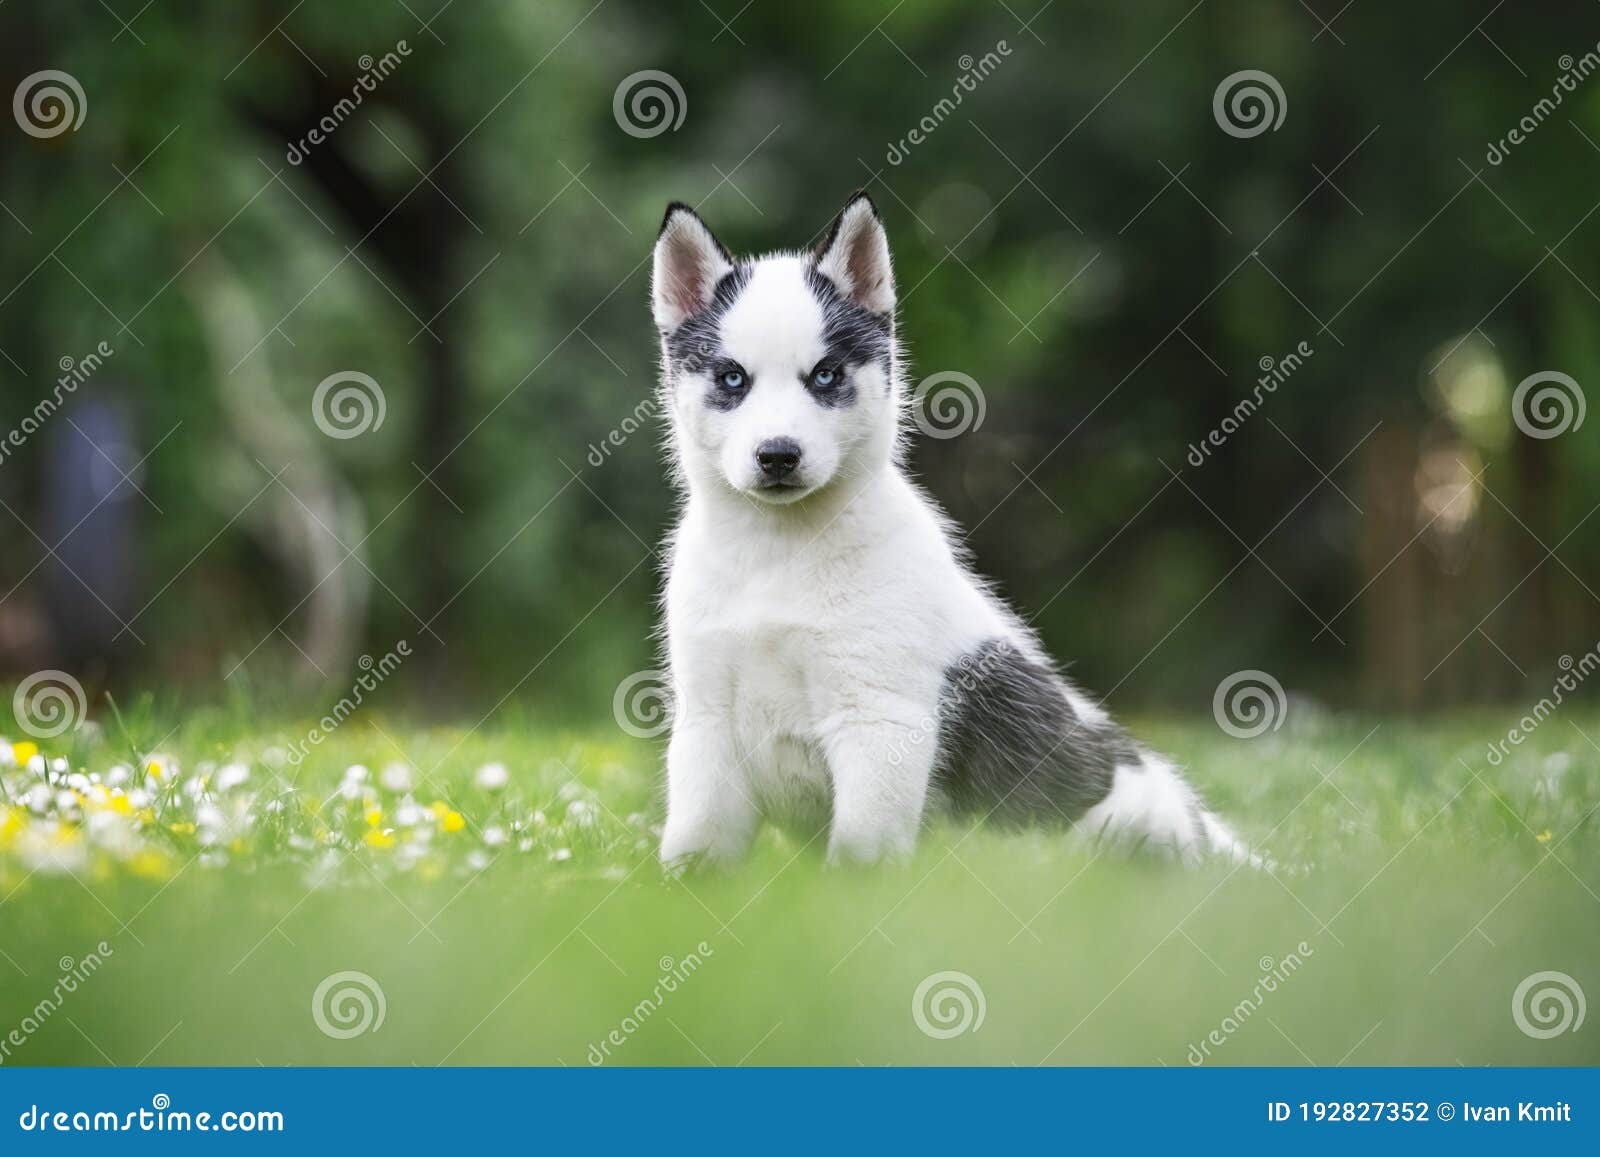 A small white dog puppy breed siberian husky